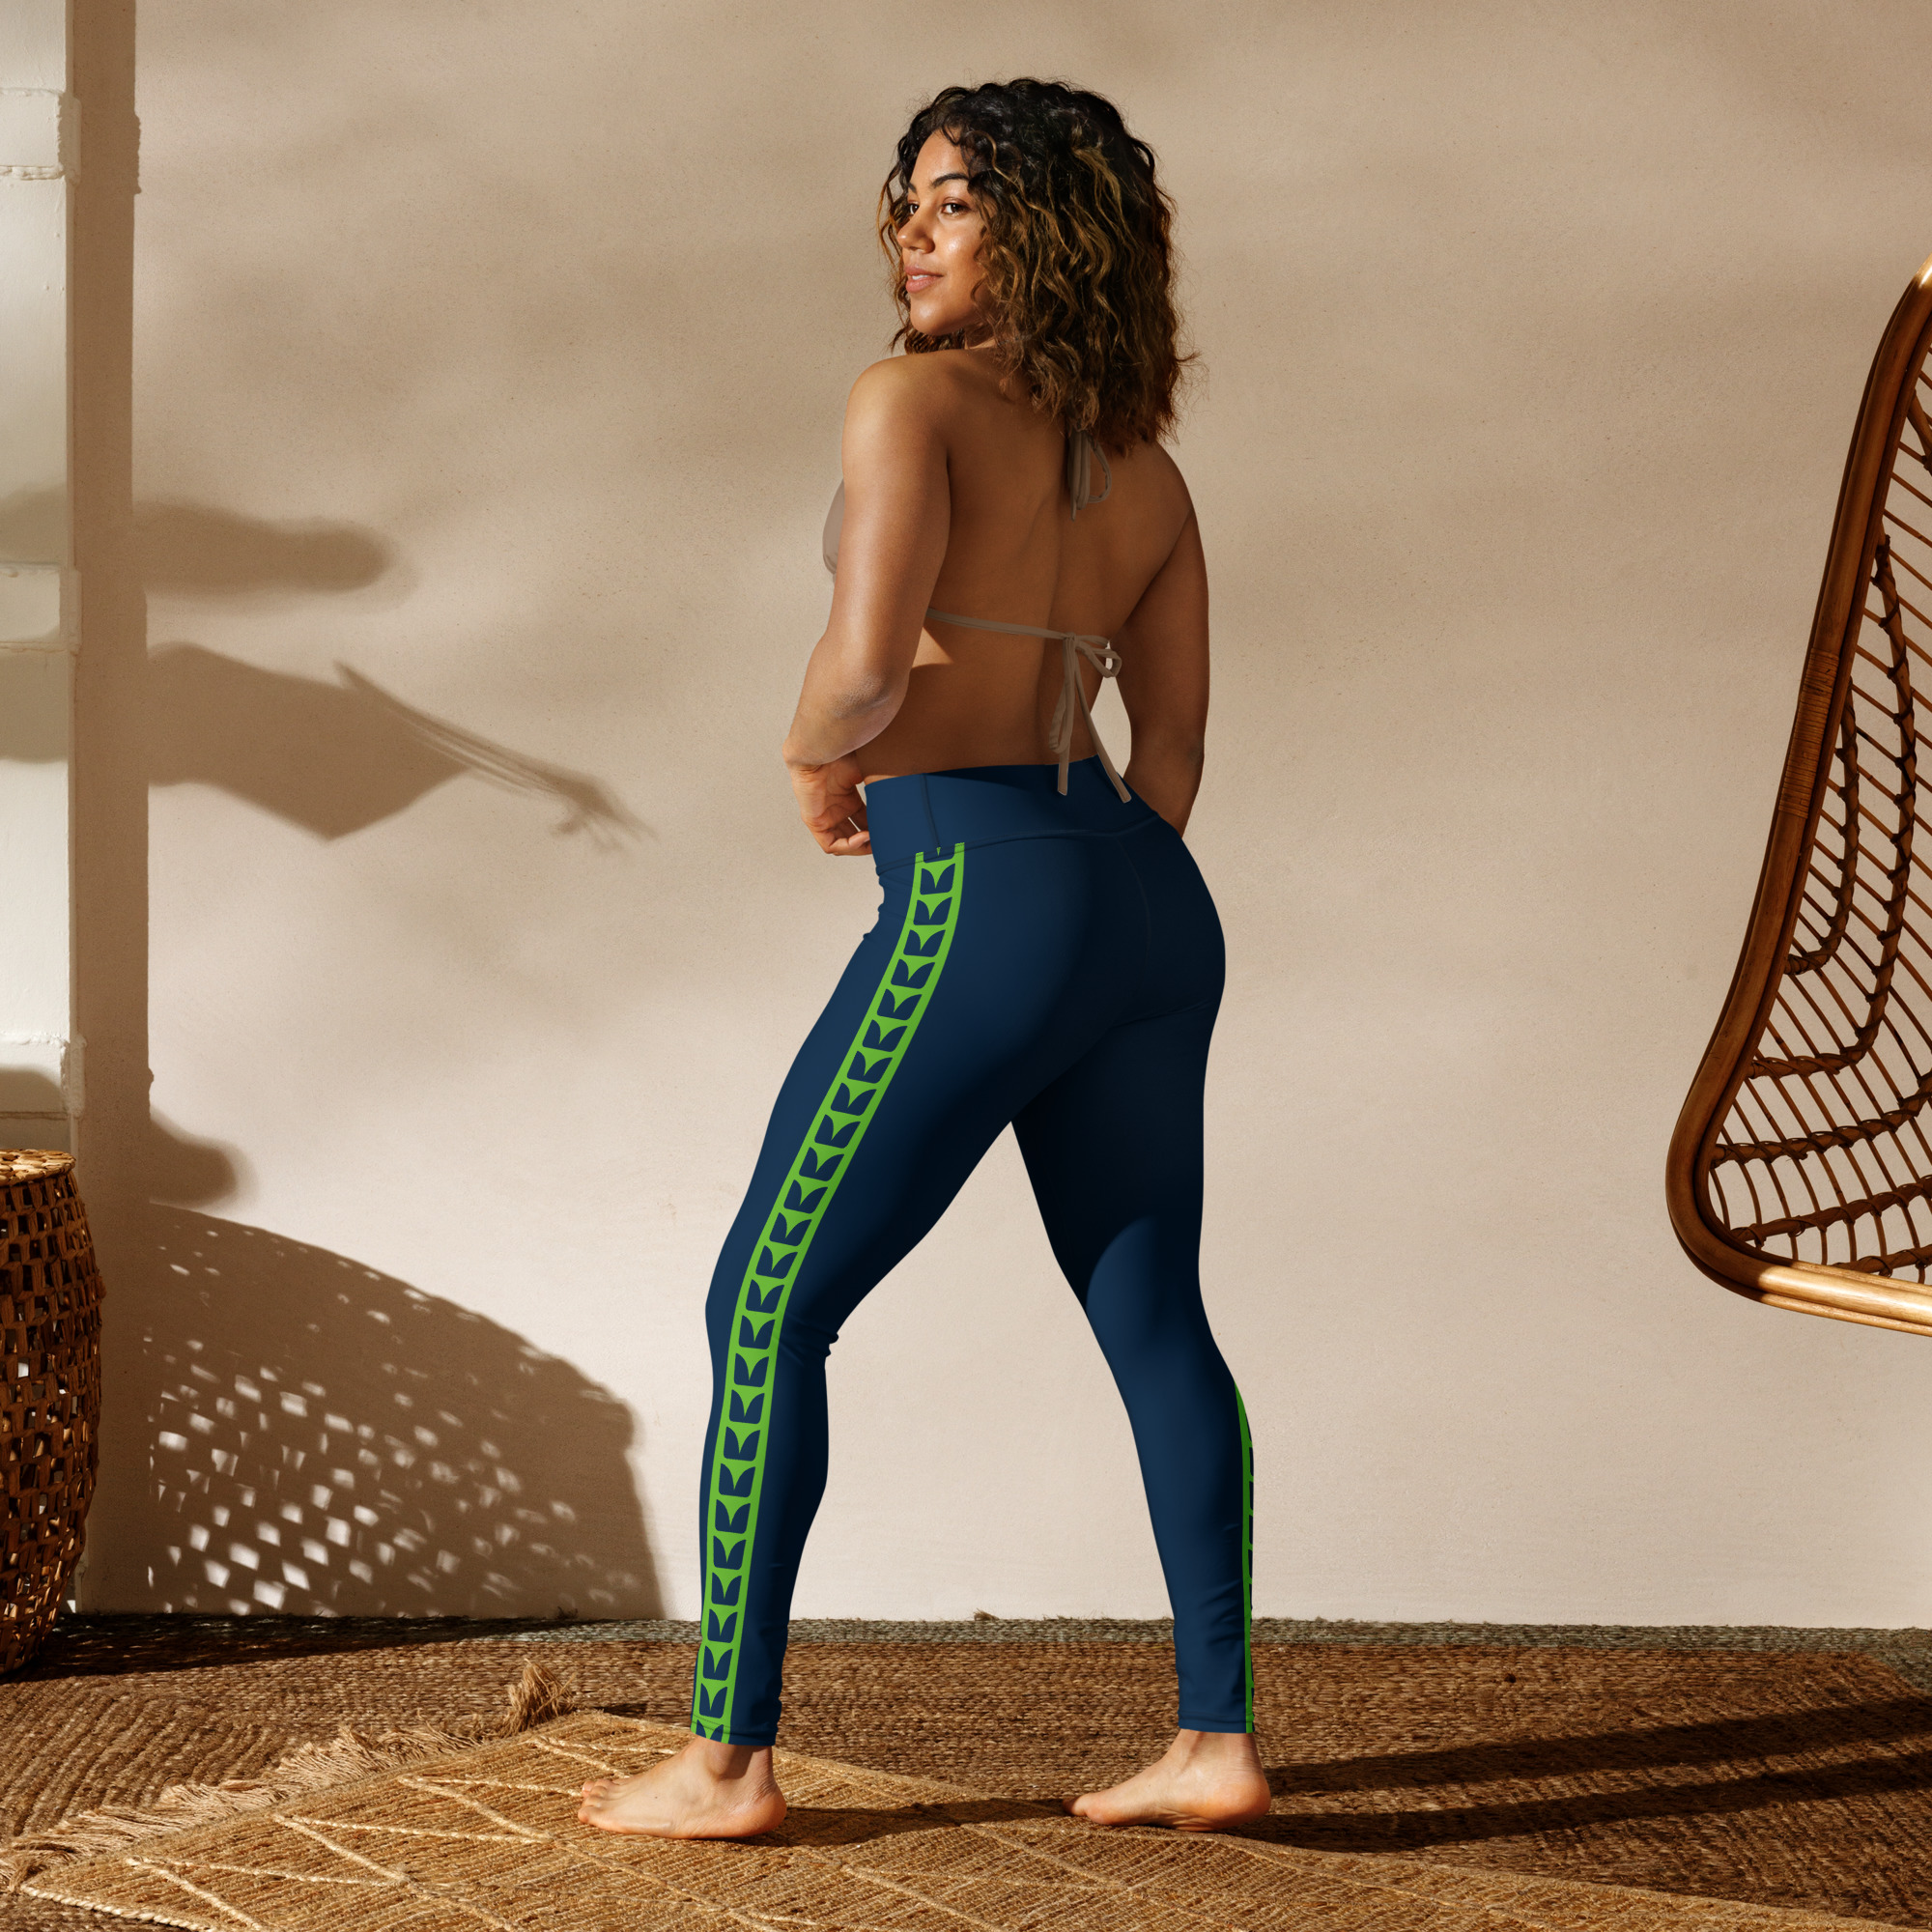 Fashion Women Plaid Printed Yoga Pants Sport High Waisted Leggings Workout  Pants